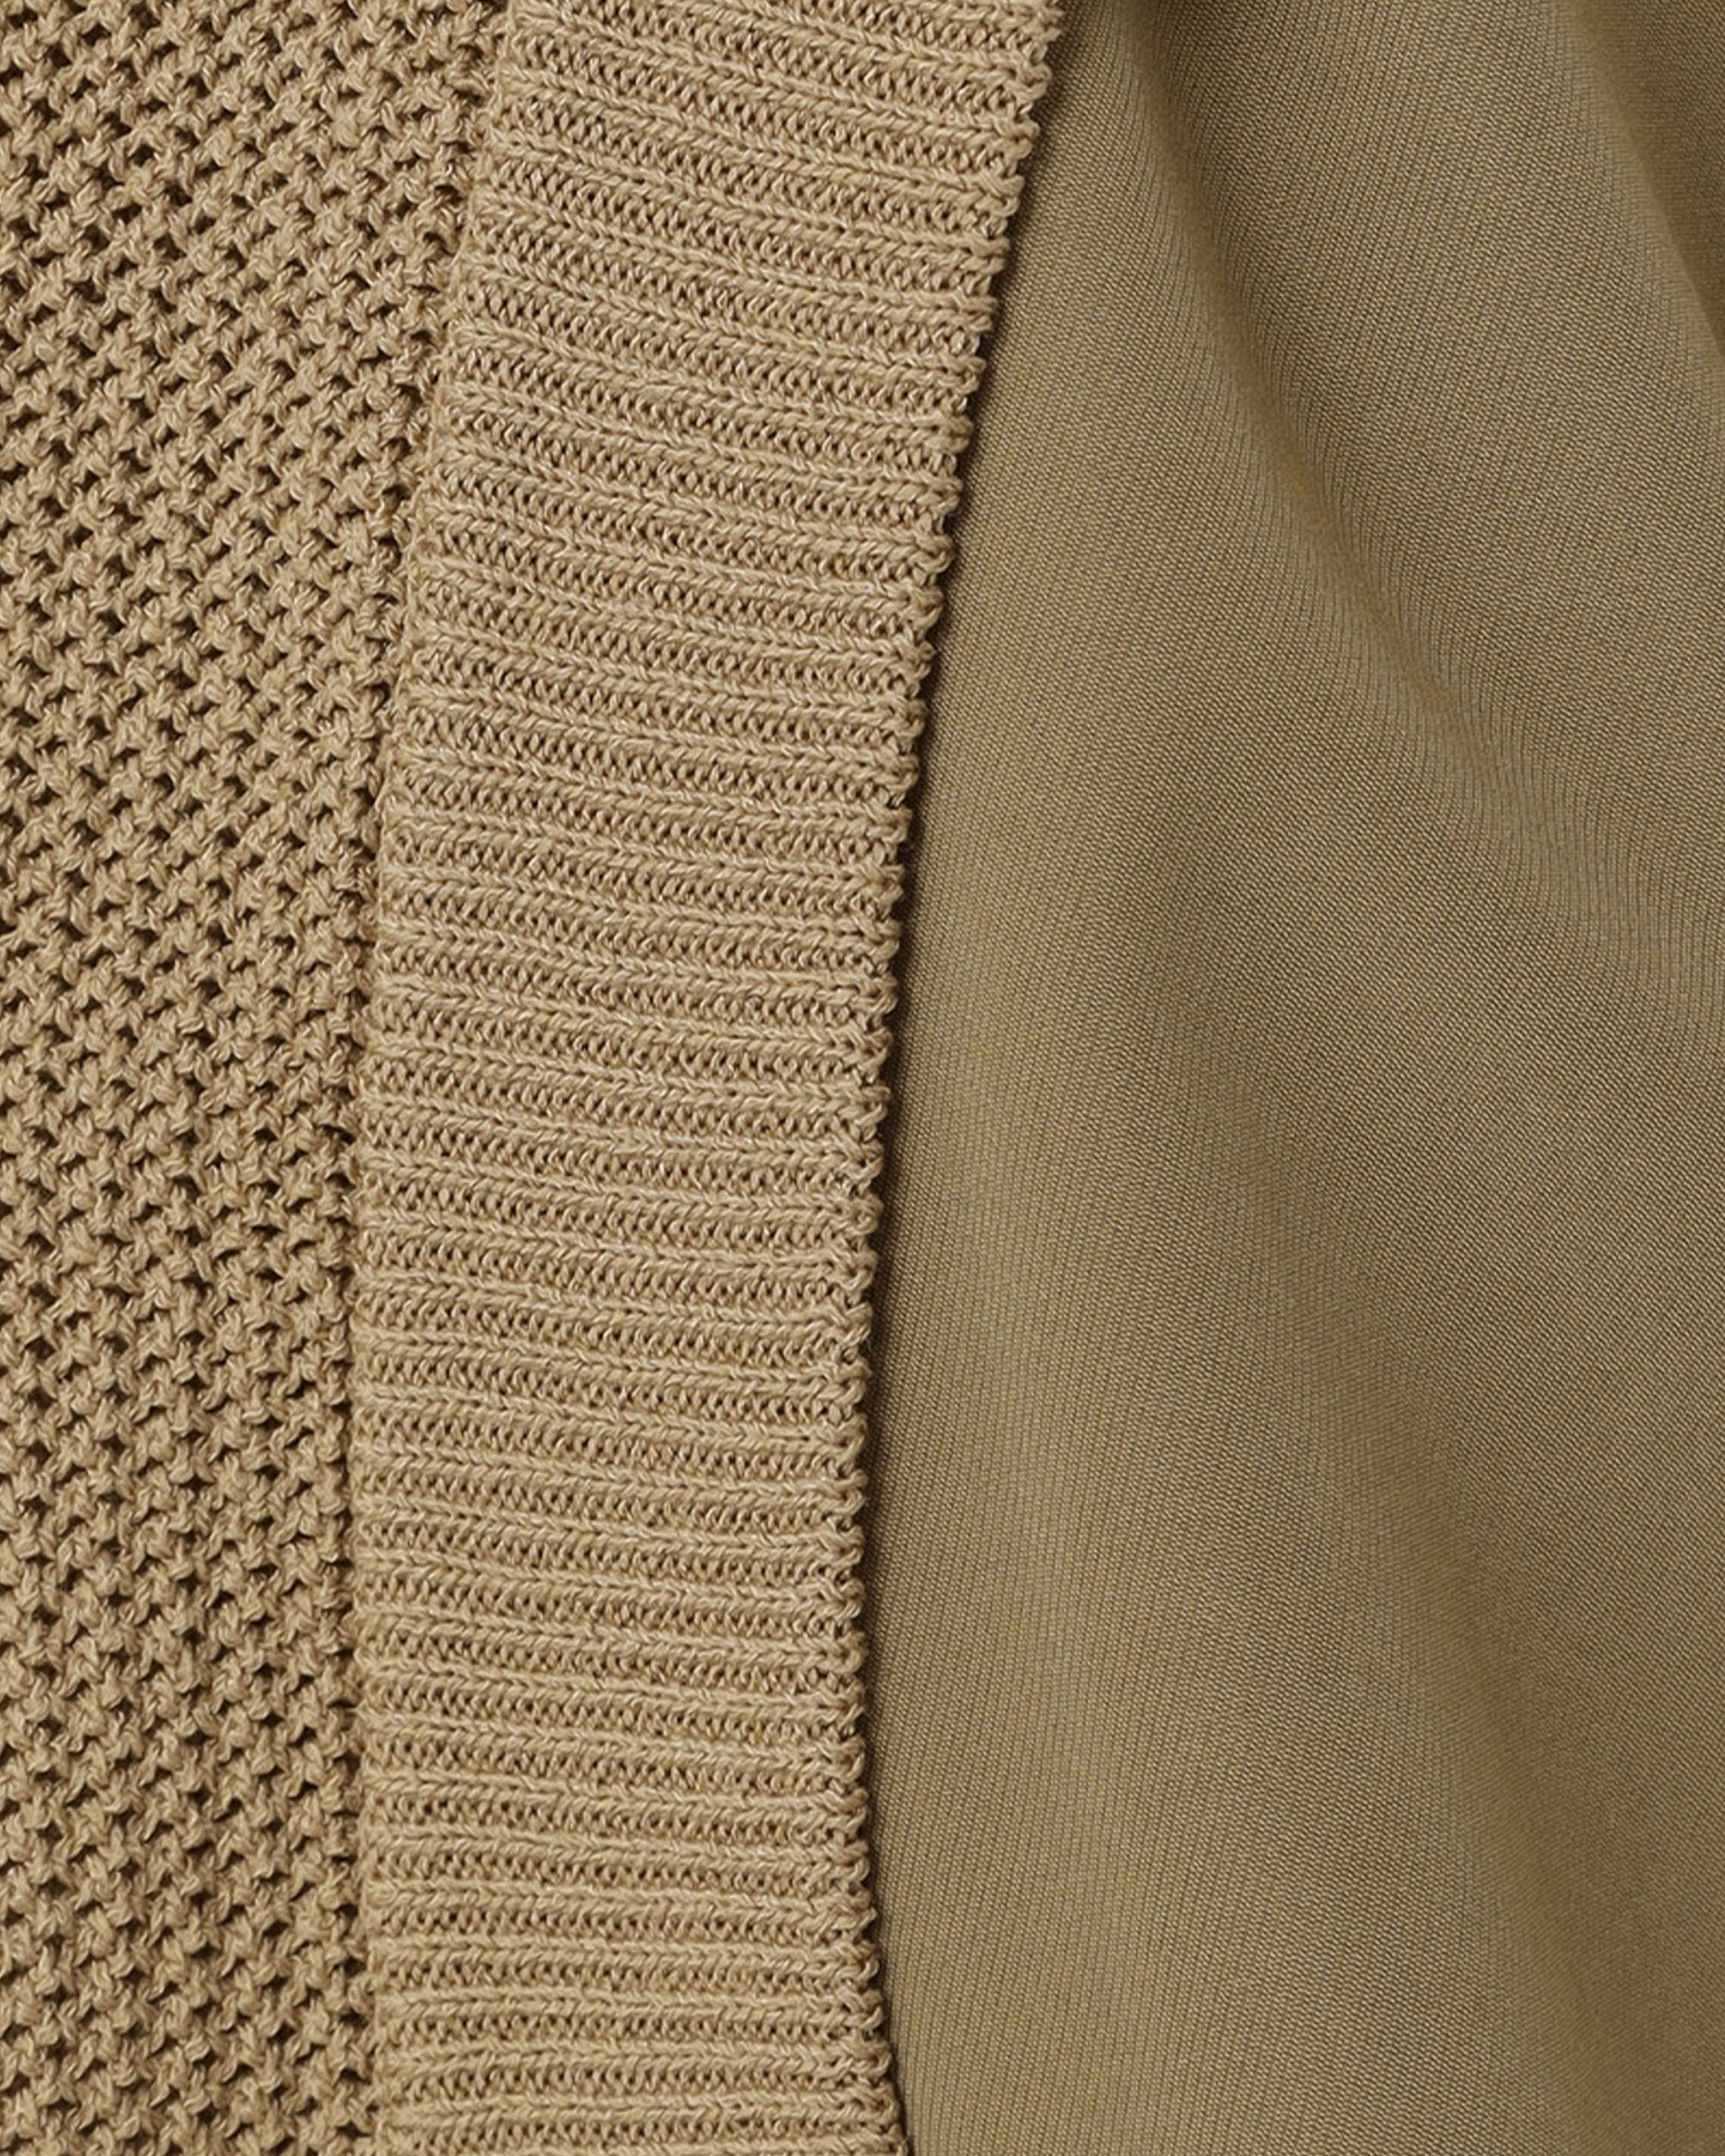 Jacket Sleeve 2 Layer Split Back Knit Top